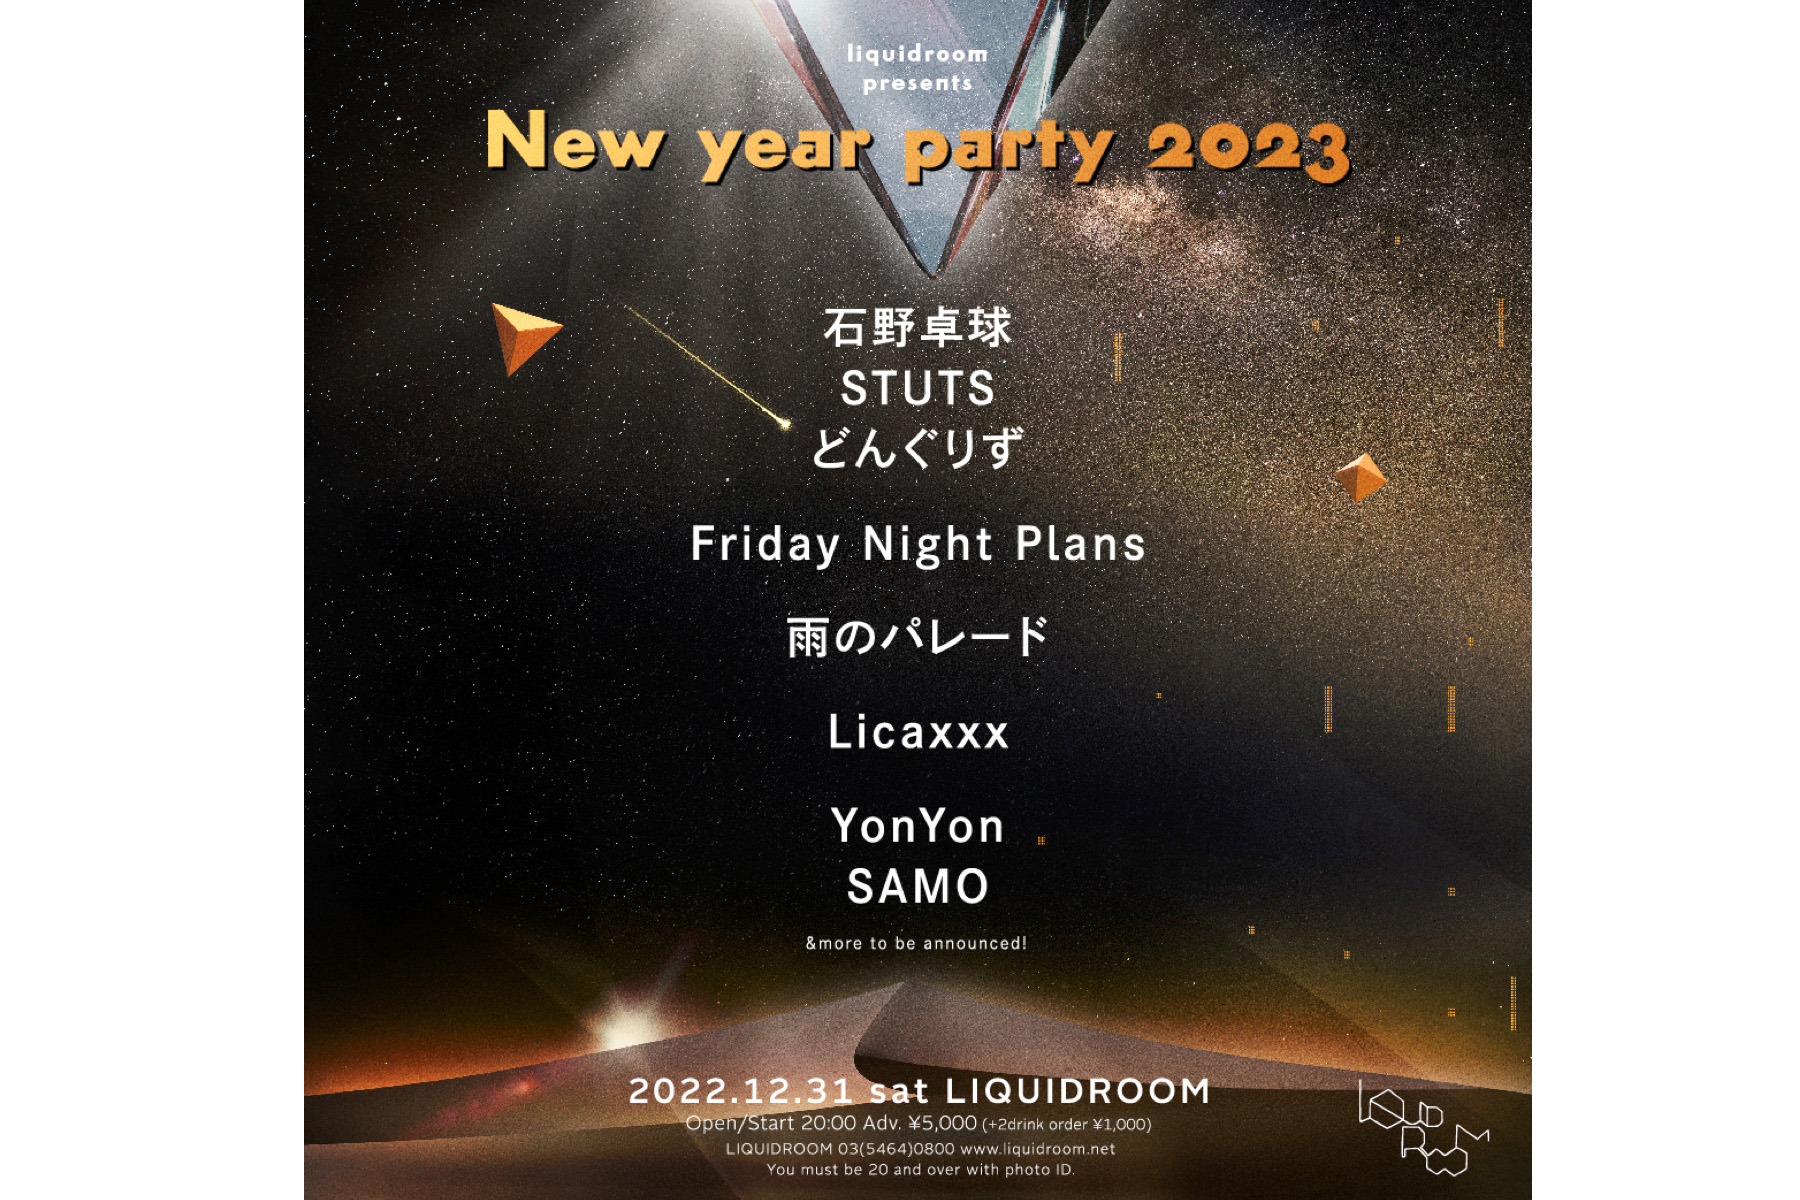 12.31 Sat. liquidroom presents New year party 2023